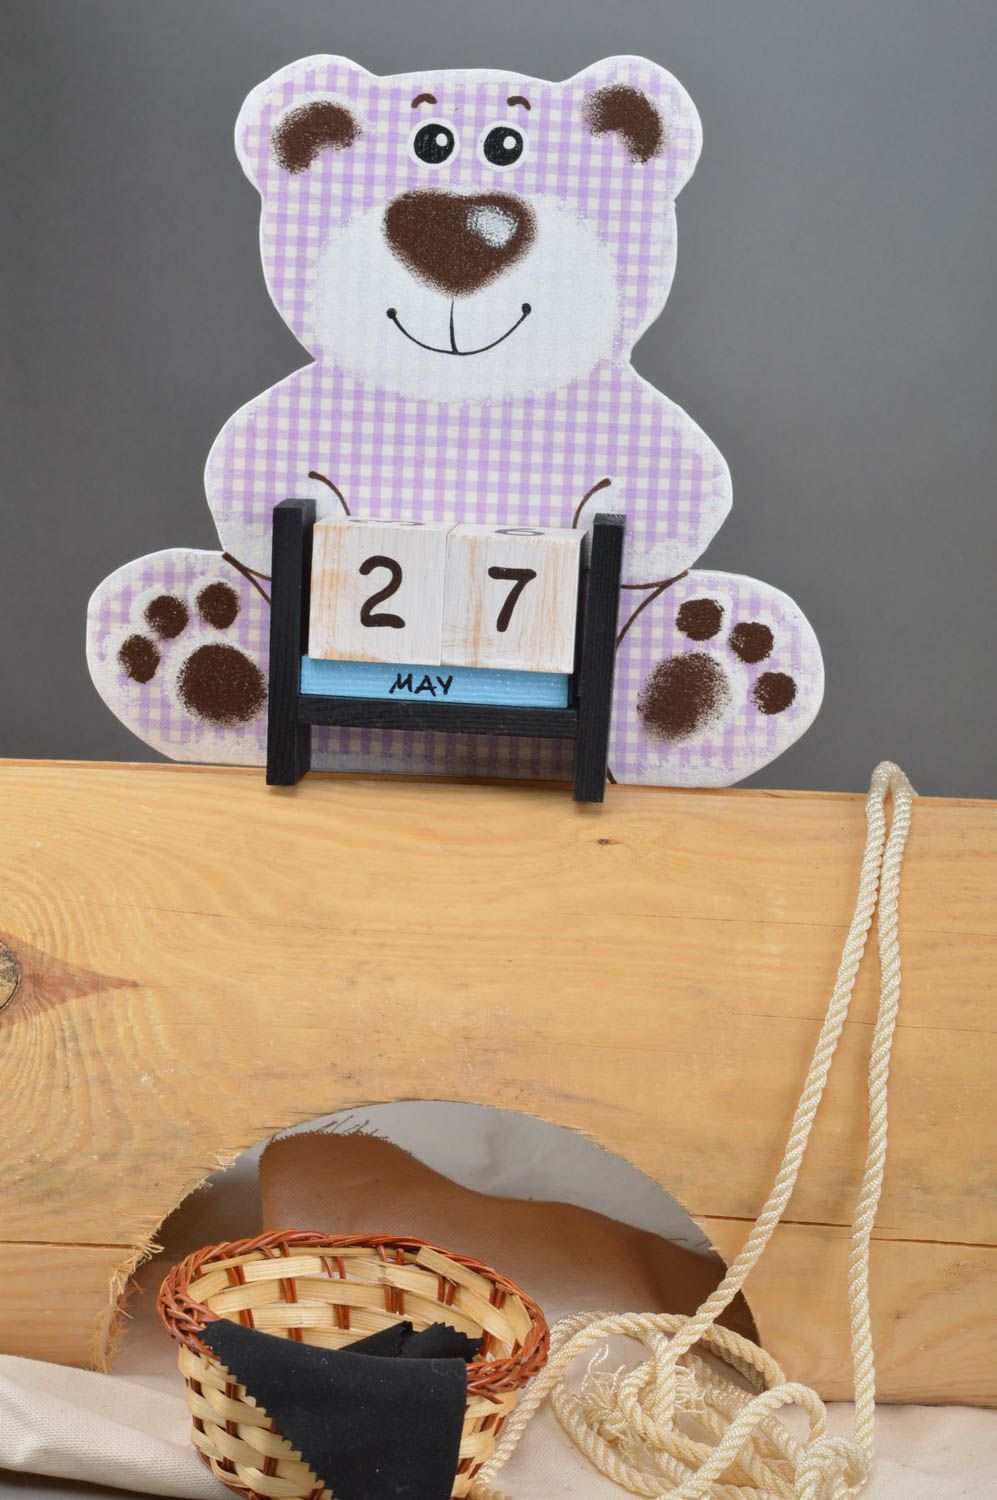 Handmade decorative calendar unusual calendar in shape of bear decoupage ideas photo 1